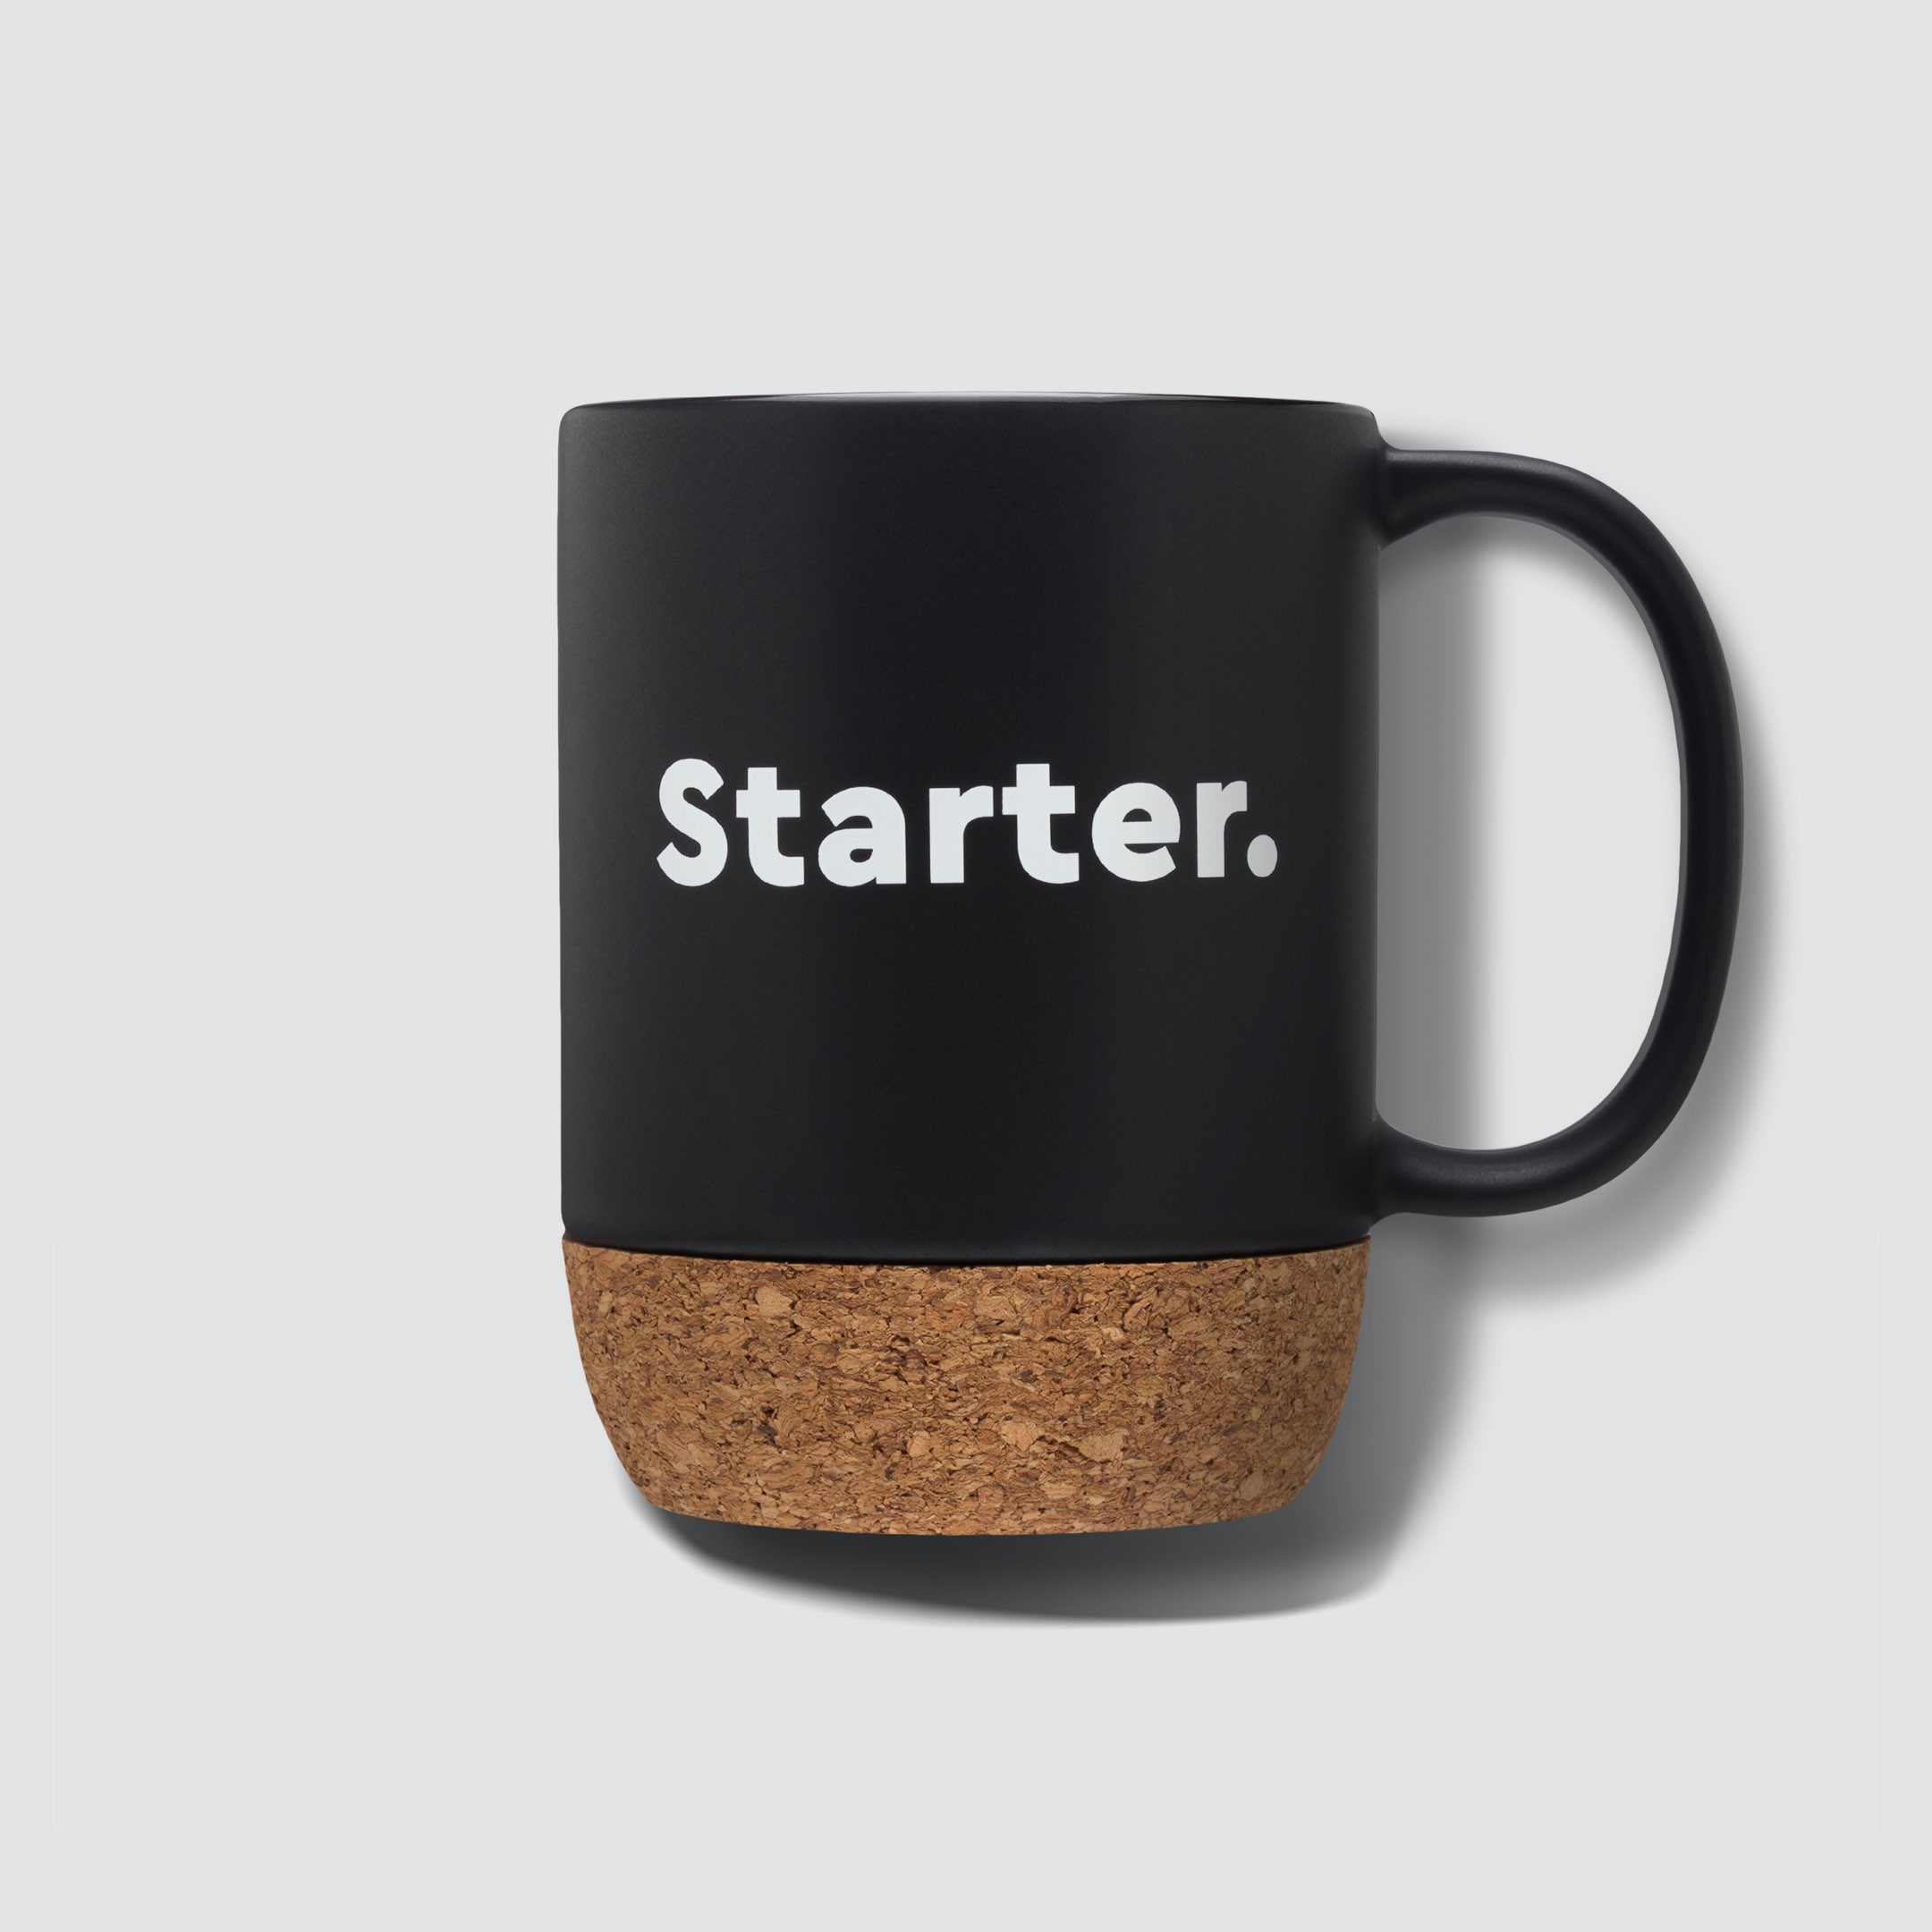 Starter Mug from Rareview